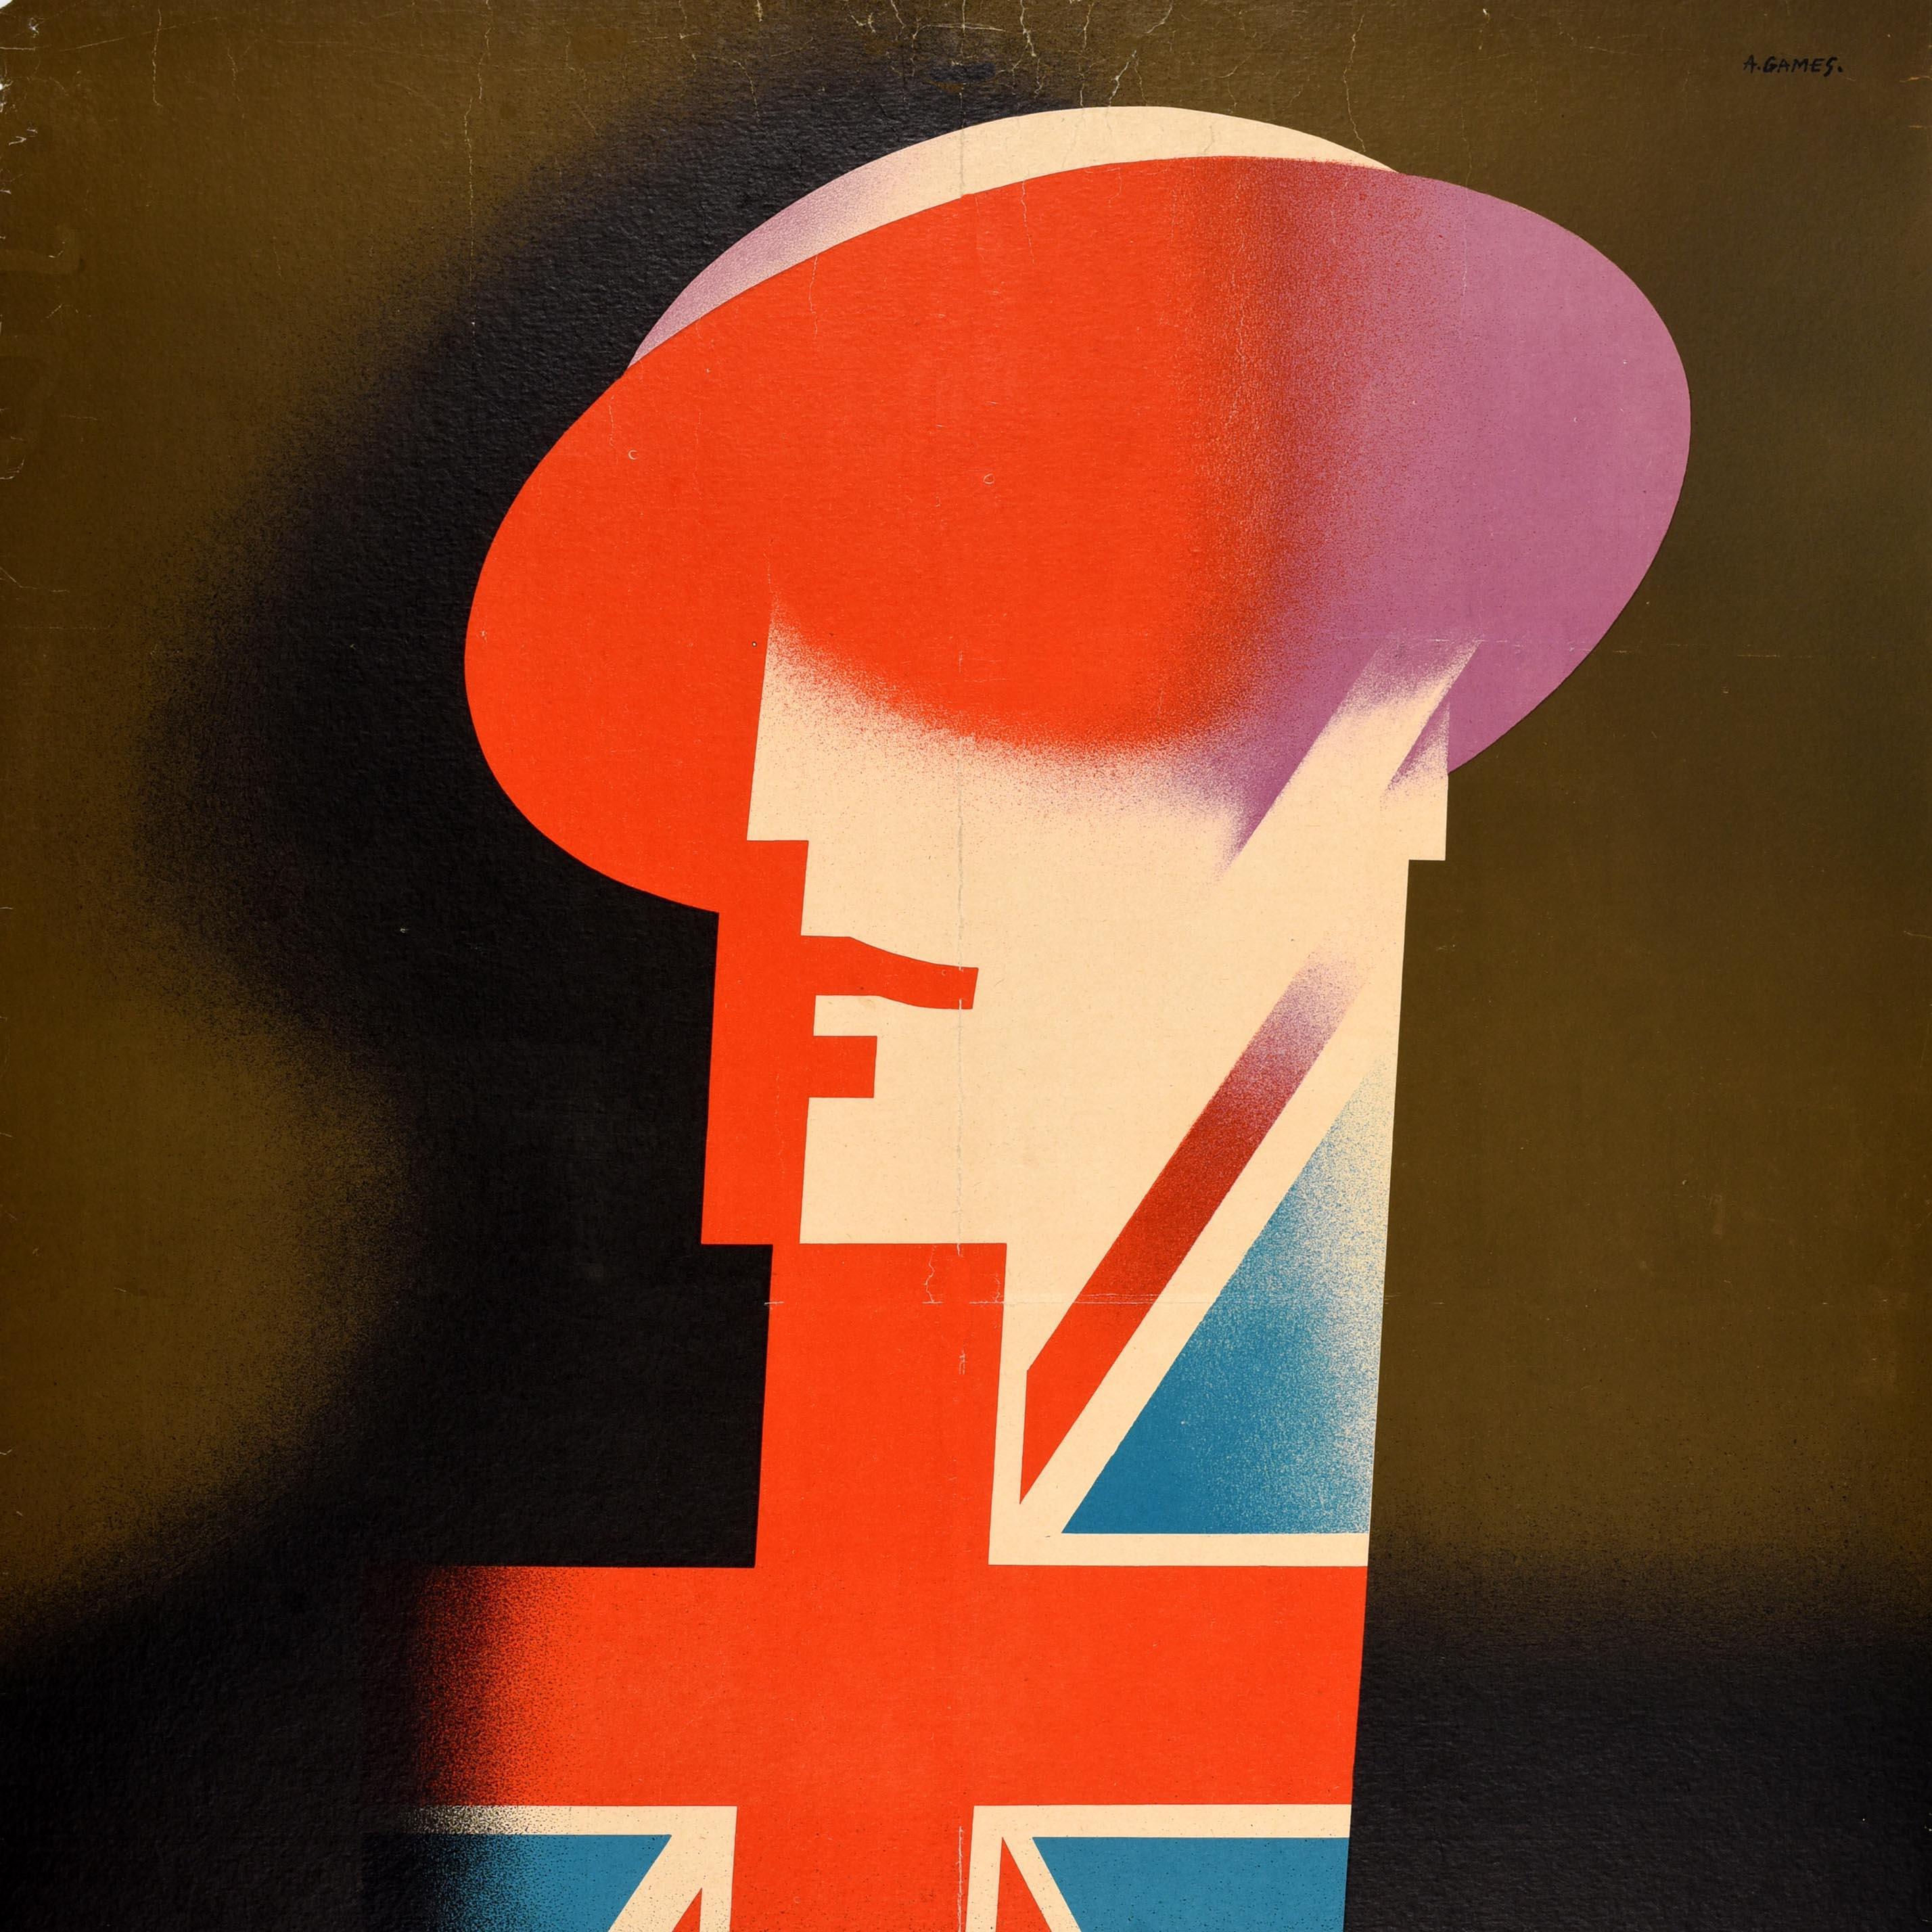 Original Vintage Advertising Poster British Army Exhibition Abram Games Soldier For Sale 2